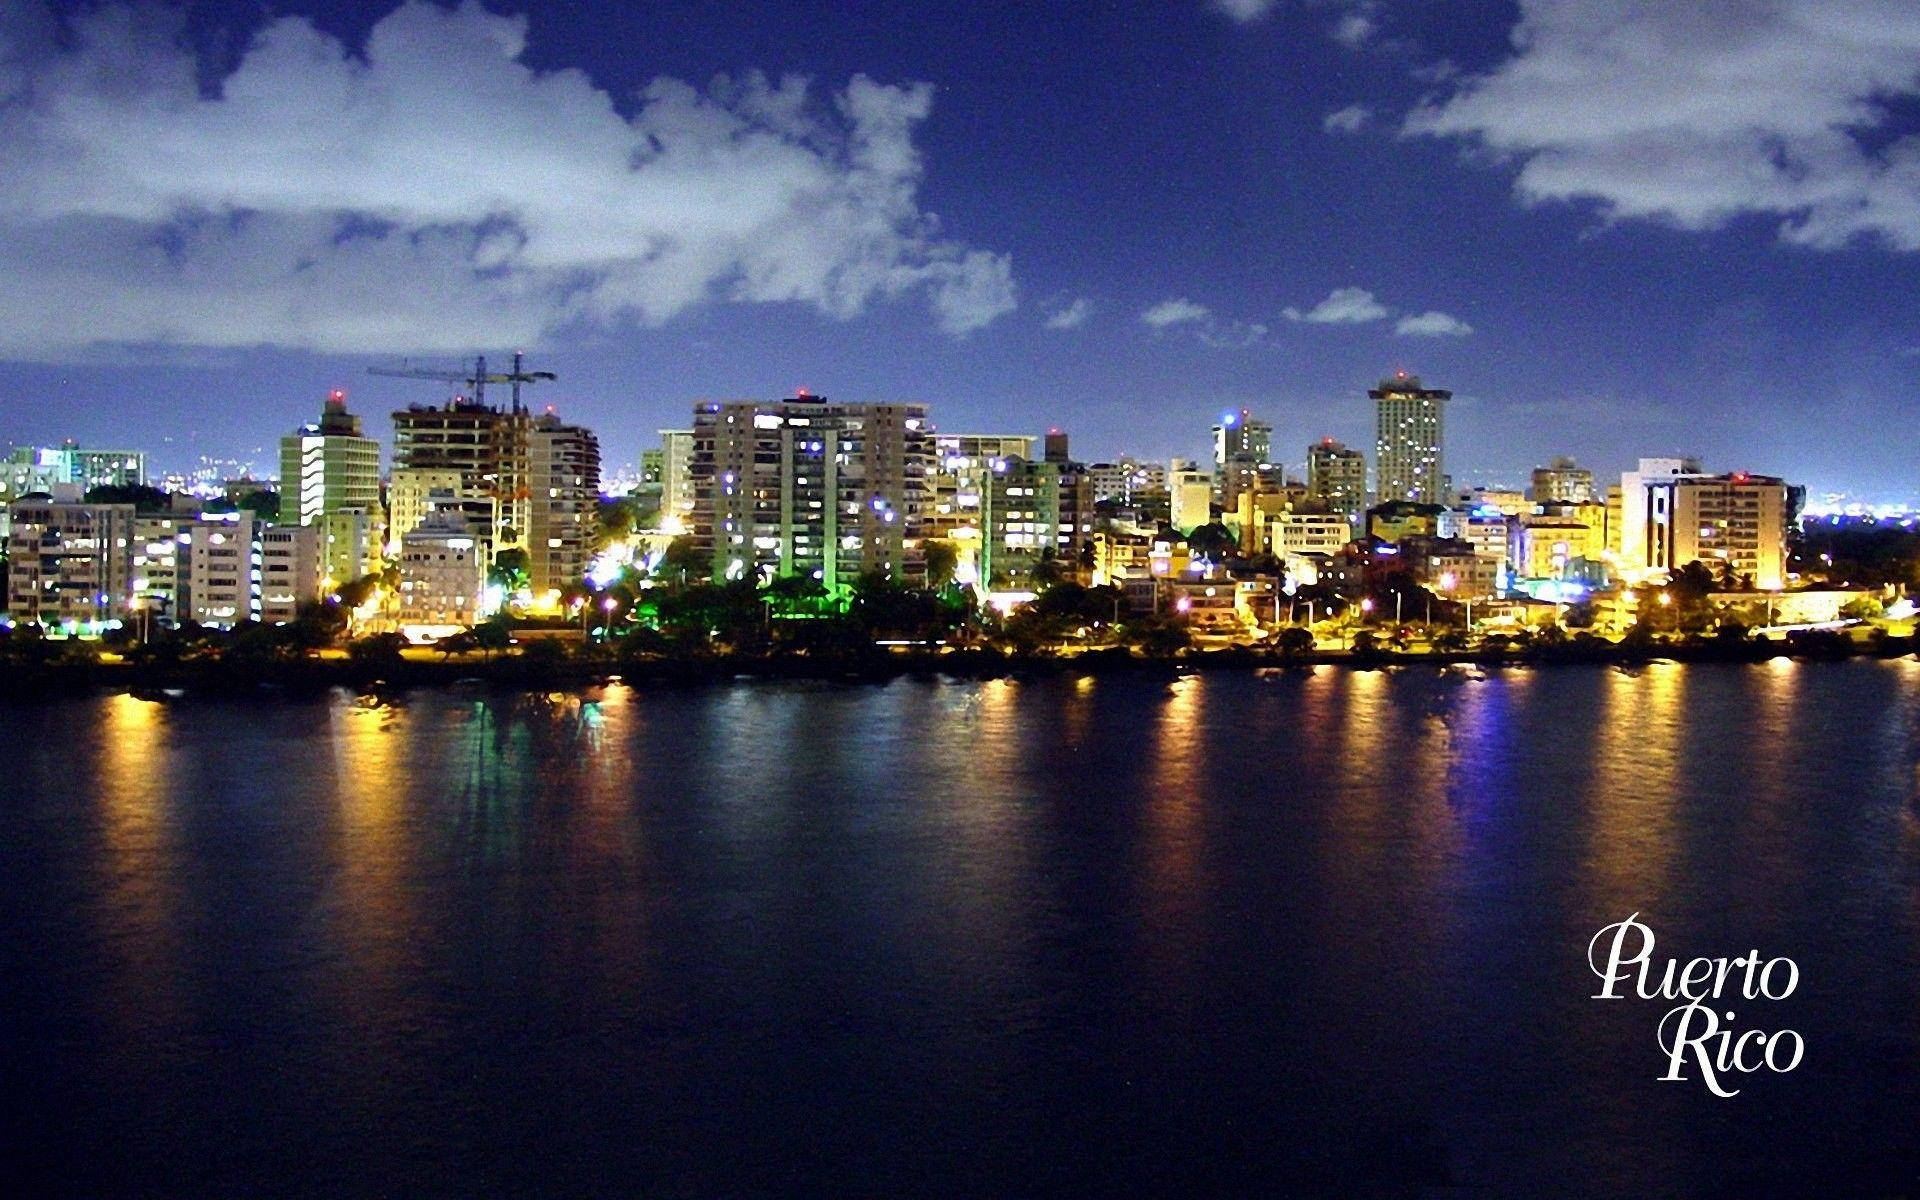 Puerto Rico Night City Life Wallpaper